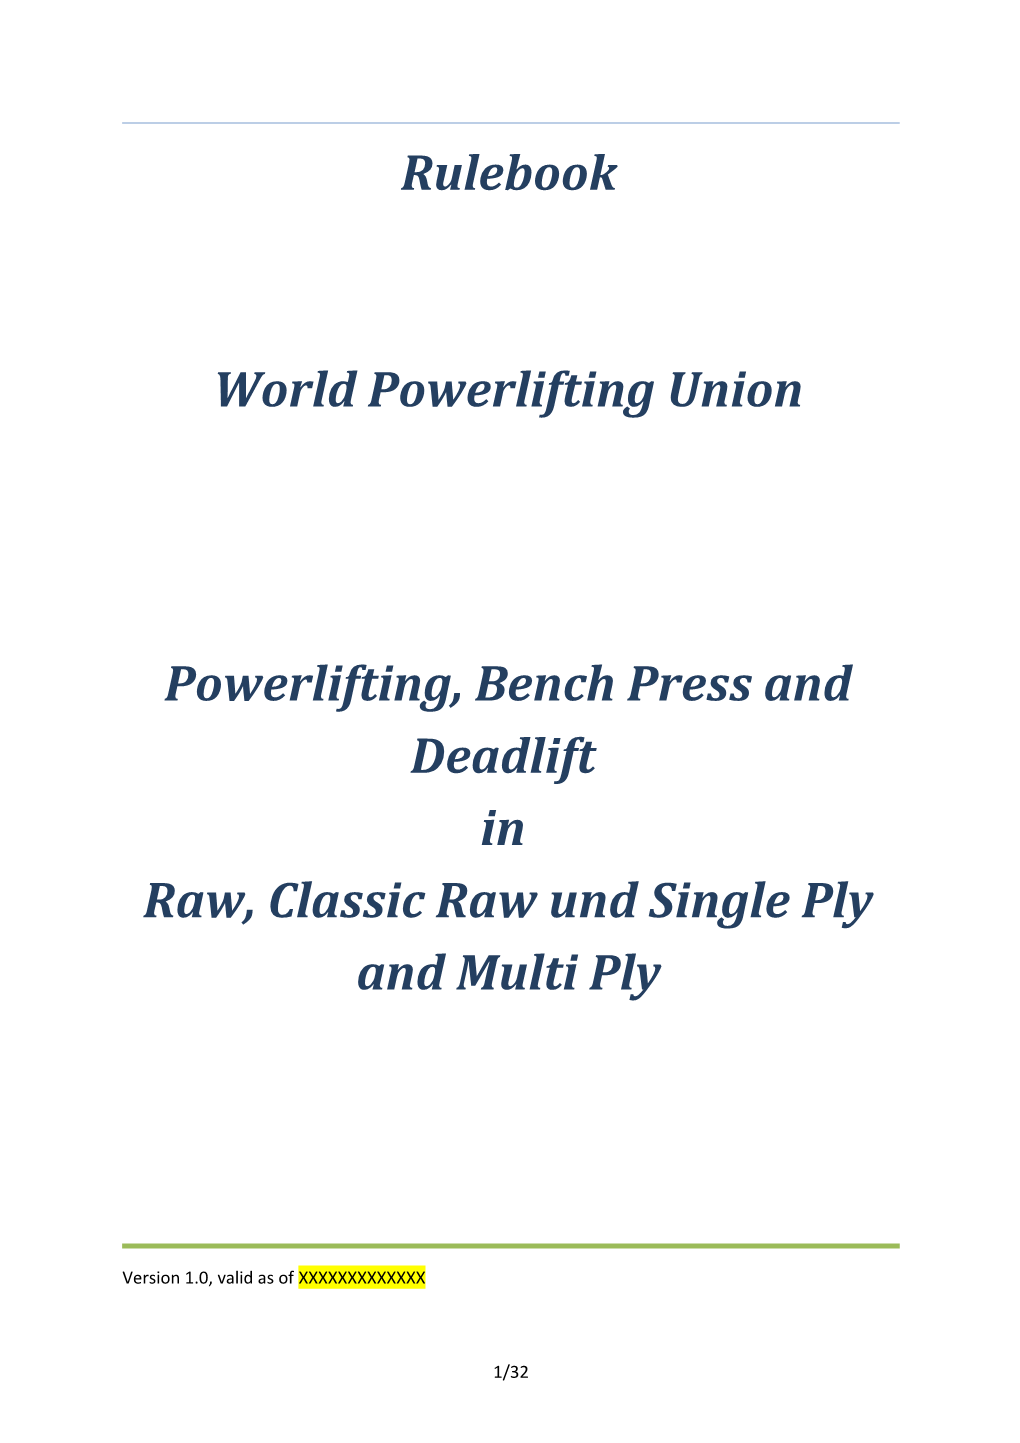 Rulebook World Powerlifting Union